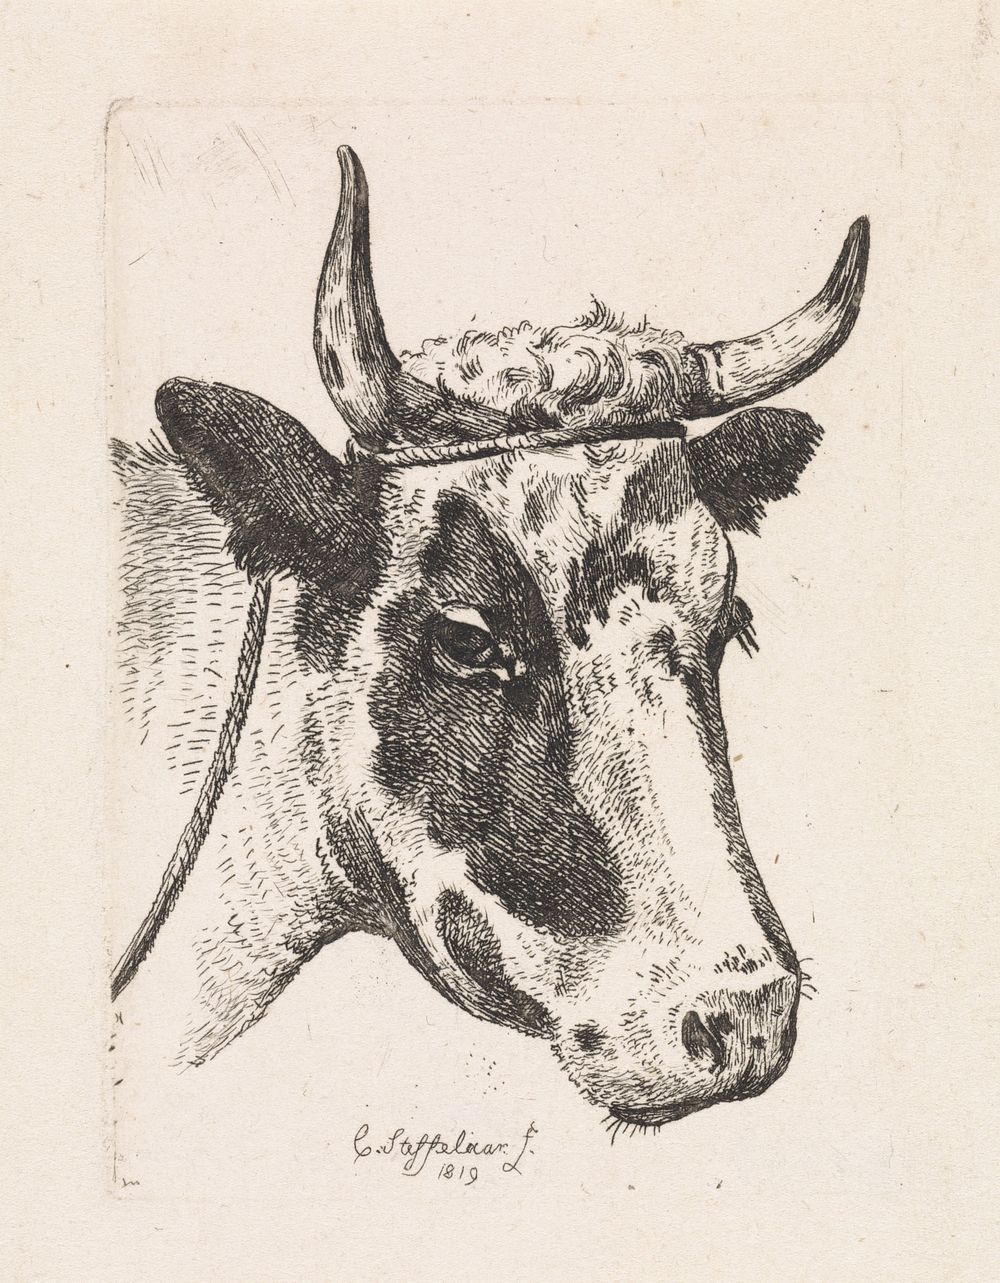 Kop van een gevlekte koe (1819) by Cornelis Steffelaar